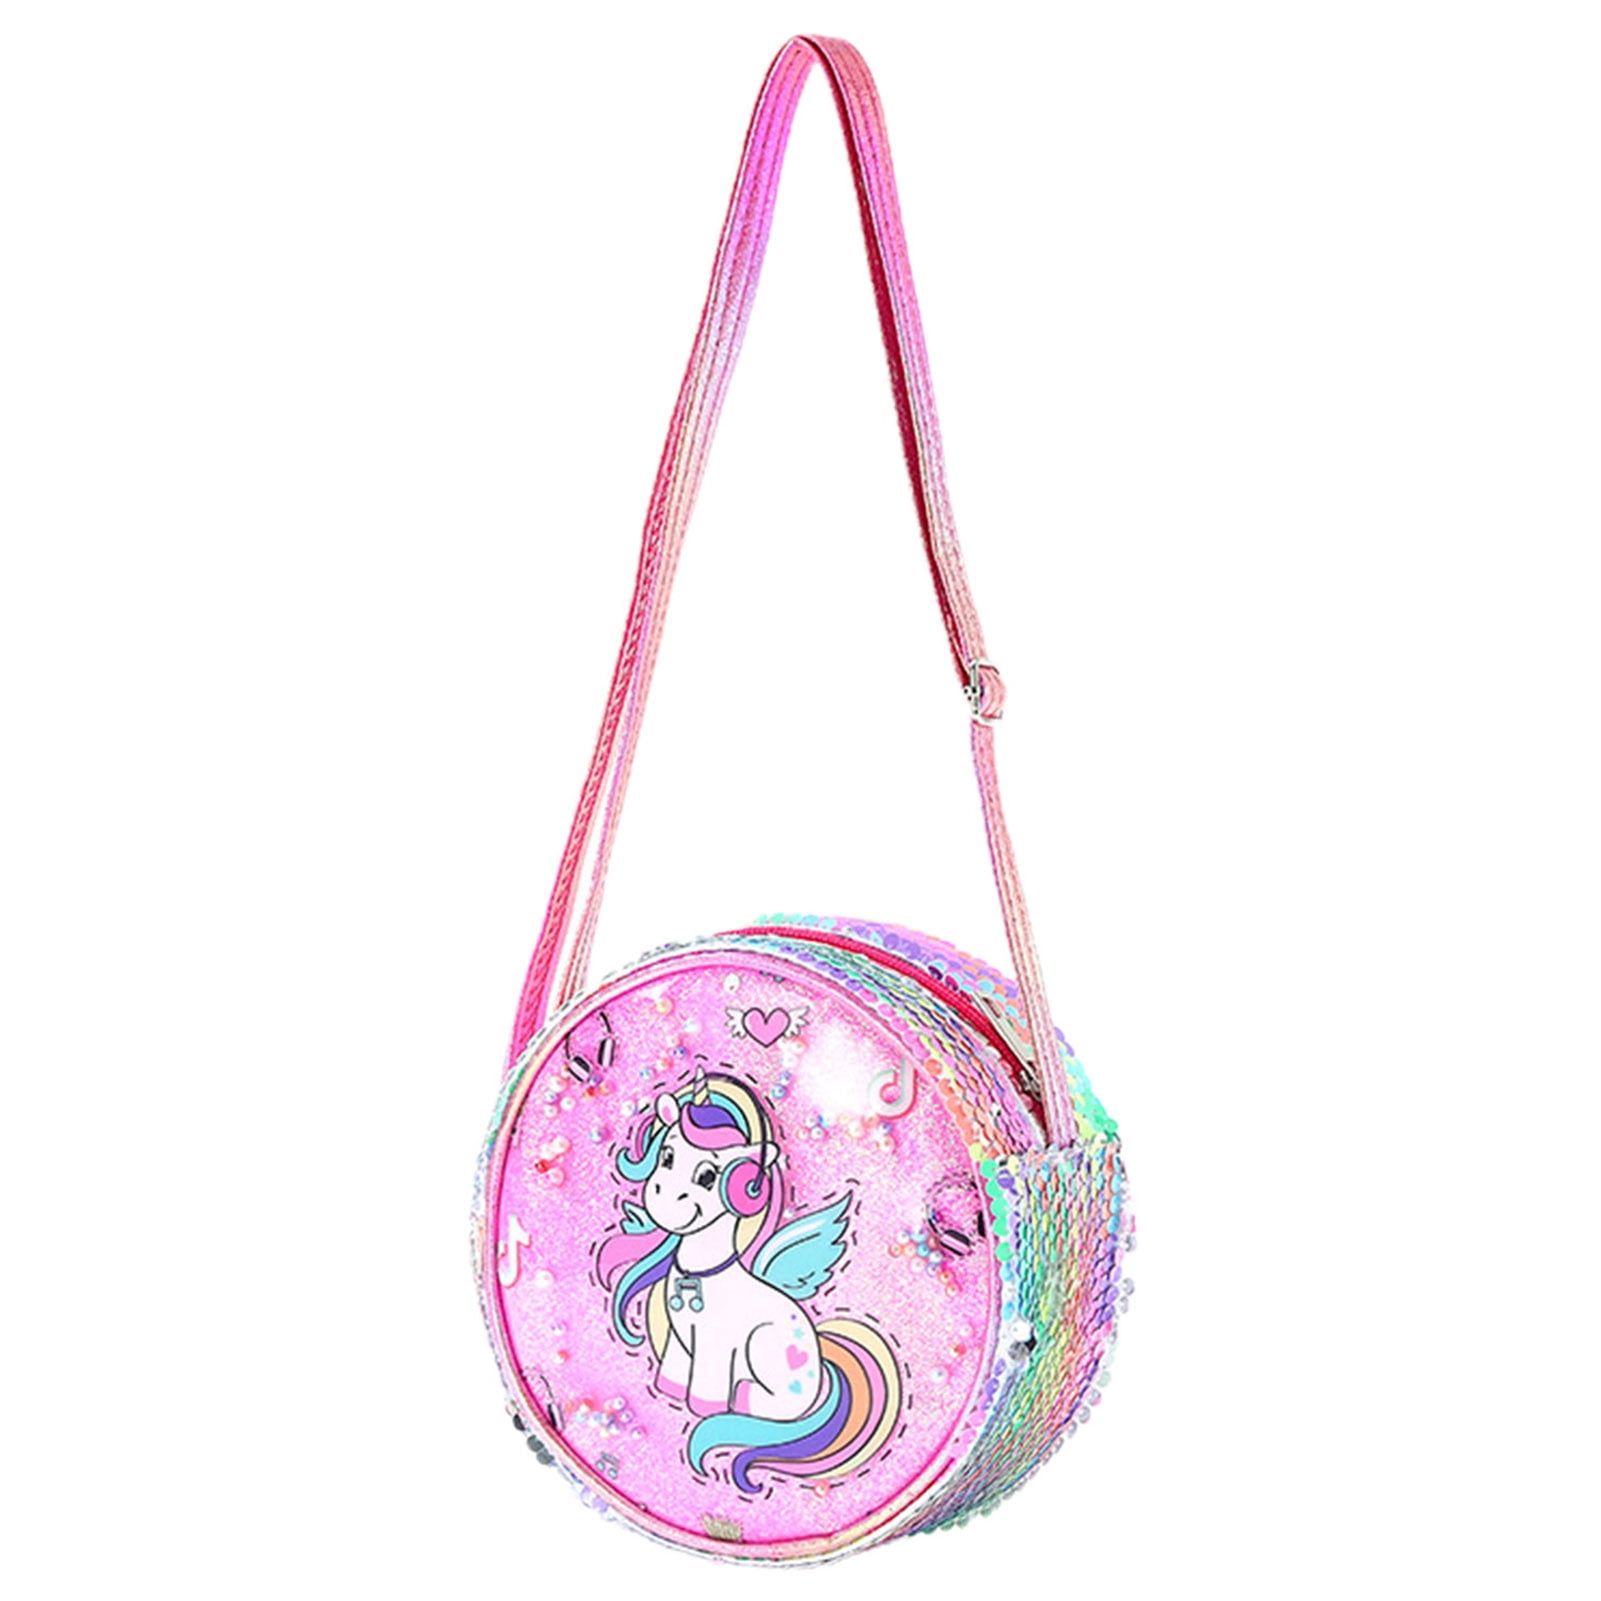 FeiraDeVaidade Glitter Unicorn Pu Crossbody Bag Small Purse Shoulder Bag For Toddlers Little Girls Unicorn Handbag a6a630e4 9776 42bb a55e b22ff1d51d72.2bcfea900ca67a8175e0bb258545a02d